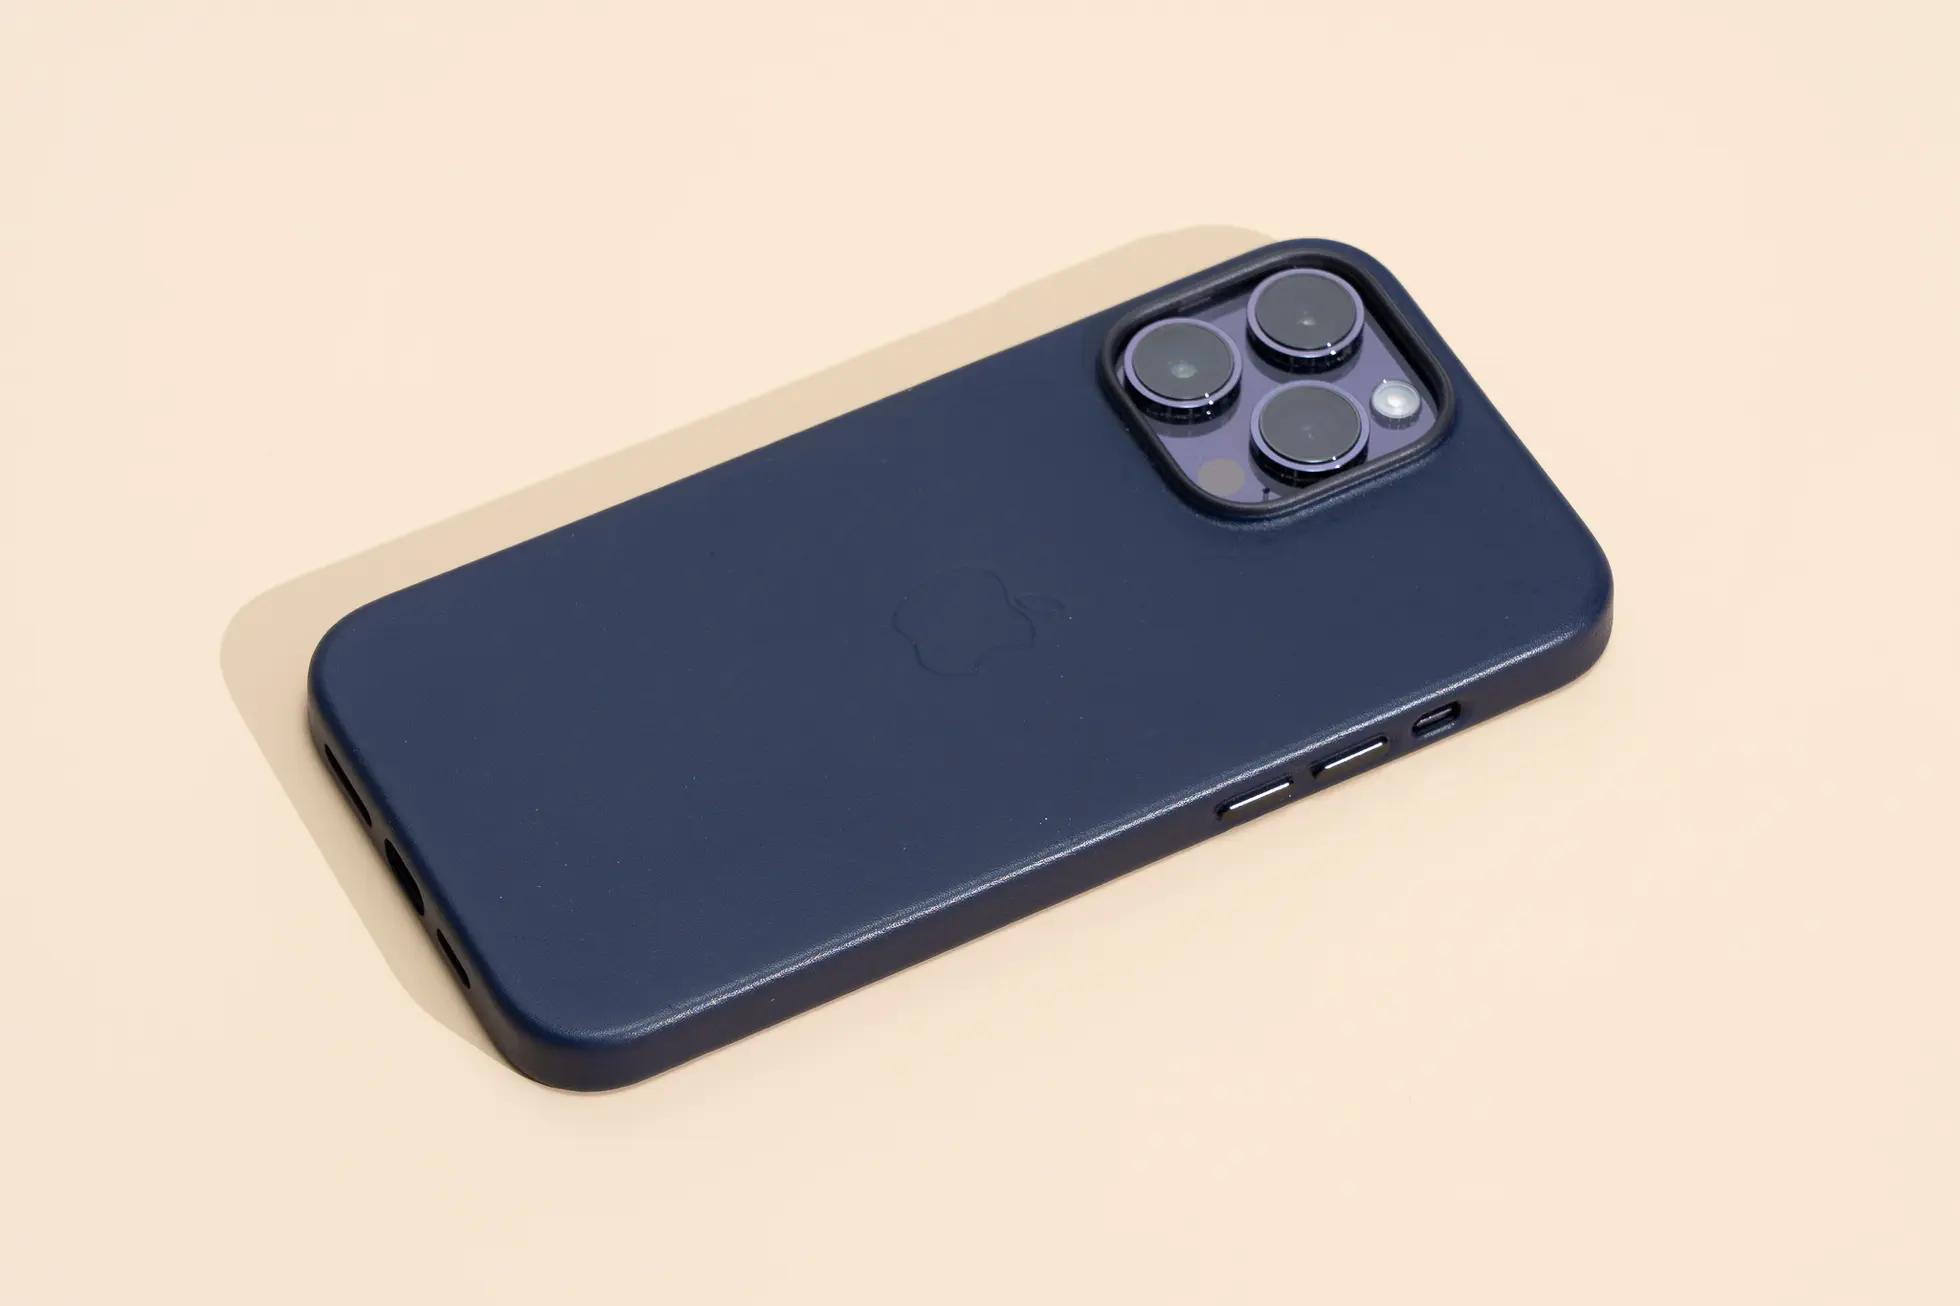 Backbone One – PlayStation Edition se lanza hoy en Android –  PlayStation.Blog LATAM